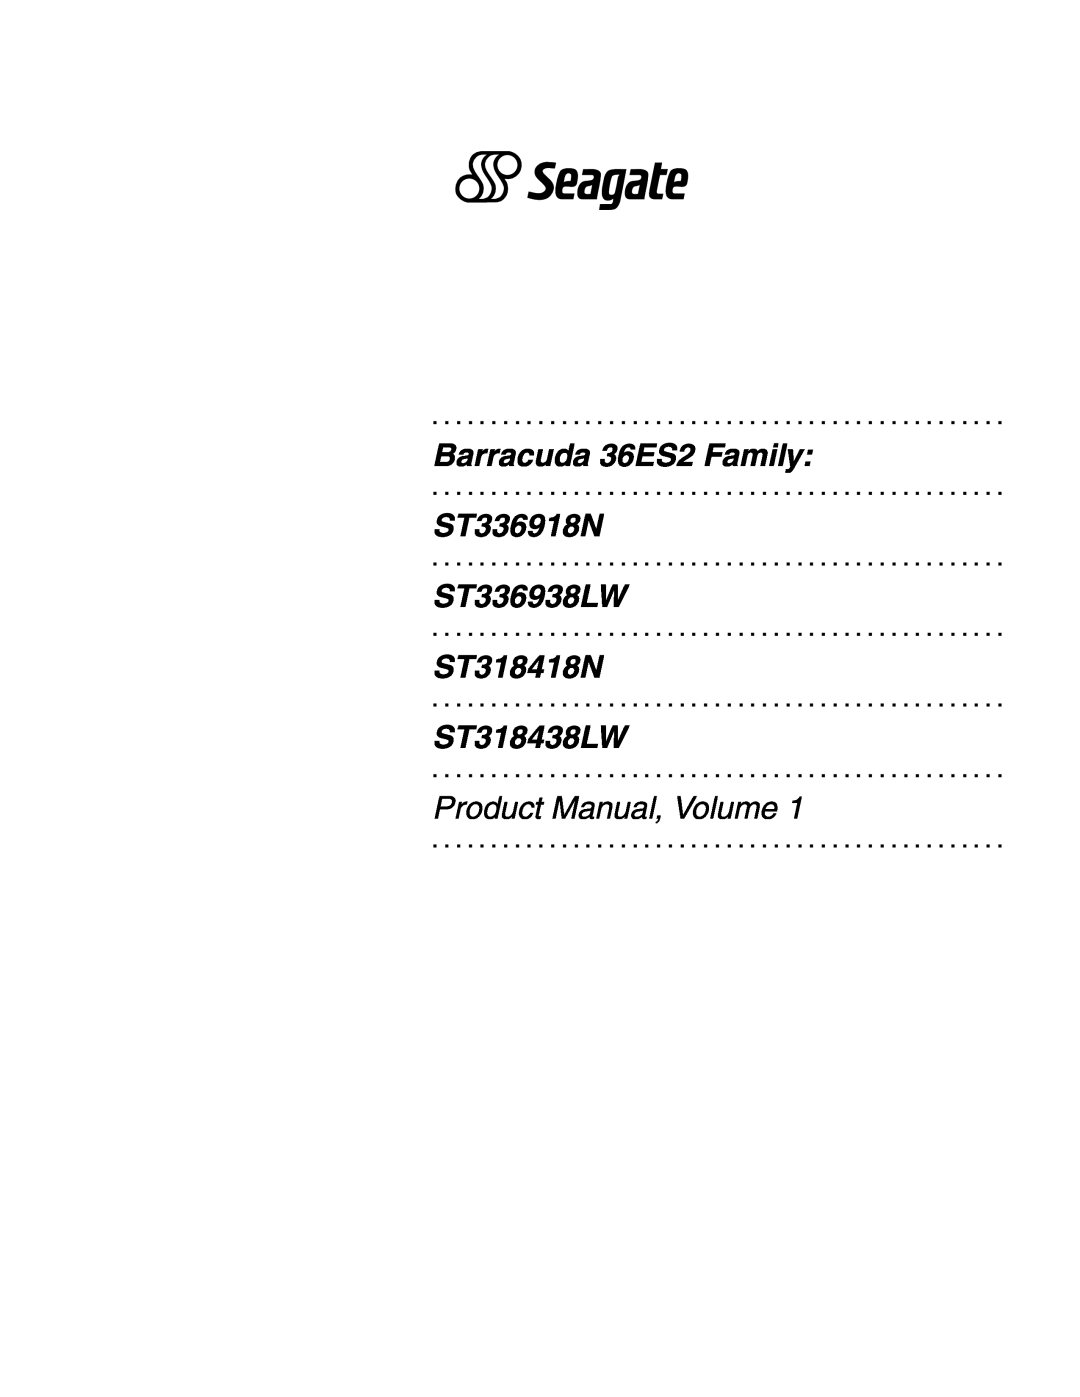 Seagate ST318438LW manual Barracuda 36ES2 Family, ST336918N, ST336938LW, ST318418N, Product Manual, Volume 